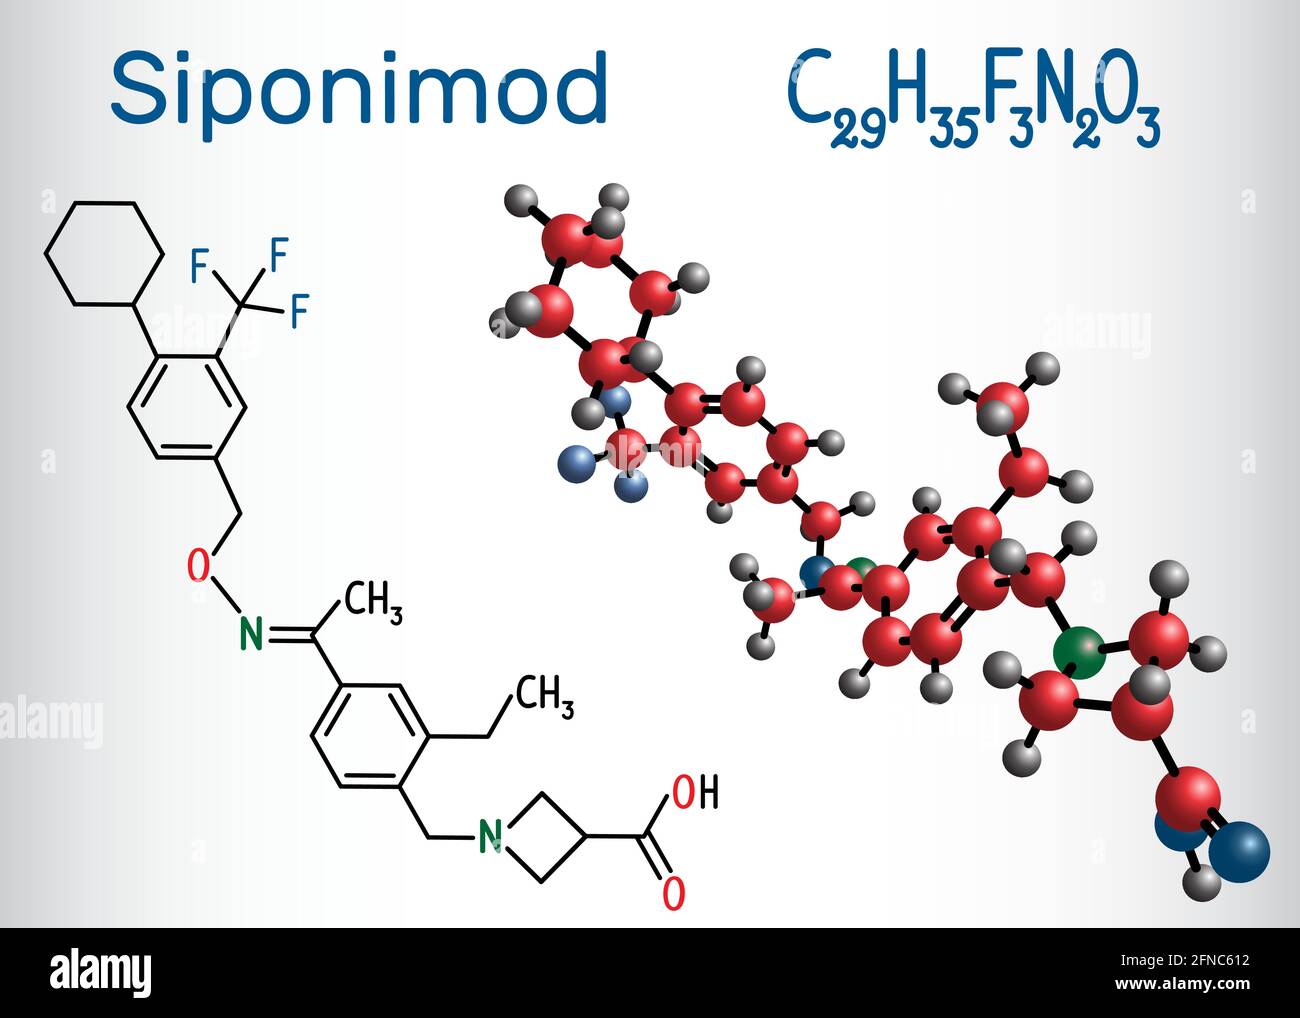 Siponimod (S1PR1-Modulator)-Molekül. Strukturelle chemische Formel und Molekülmodell. Vektorgrafik Stock Vektor